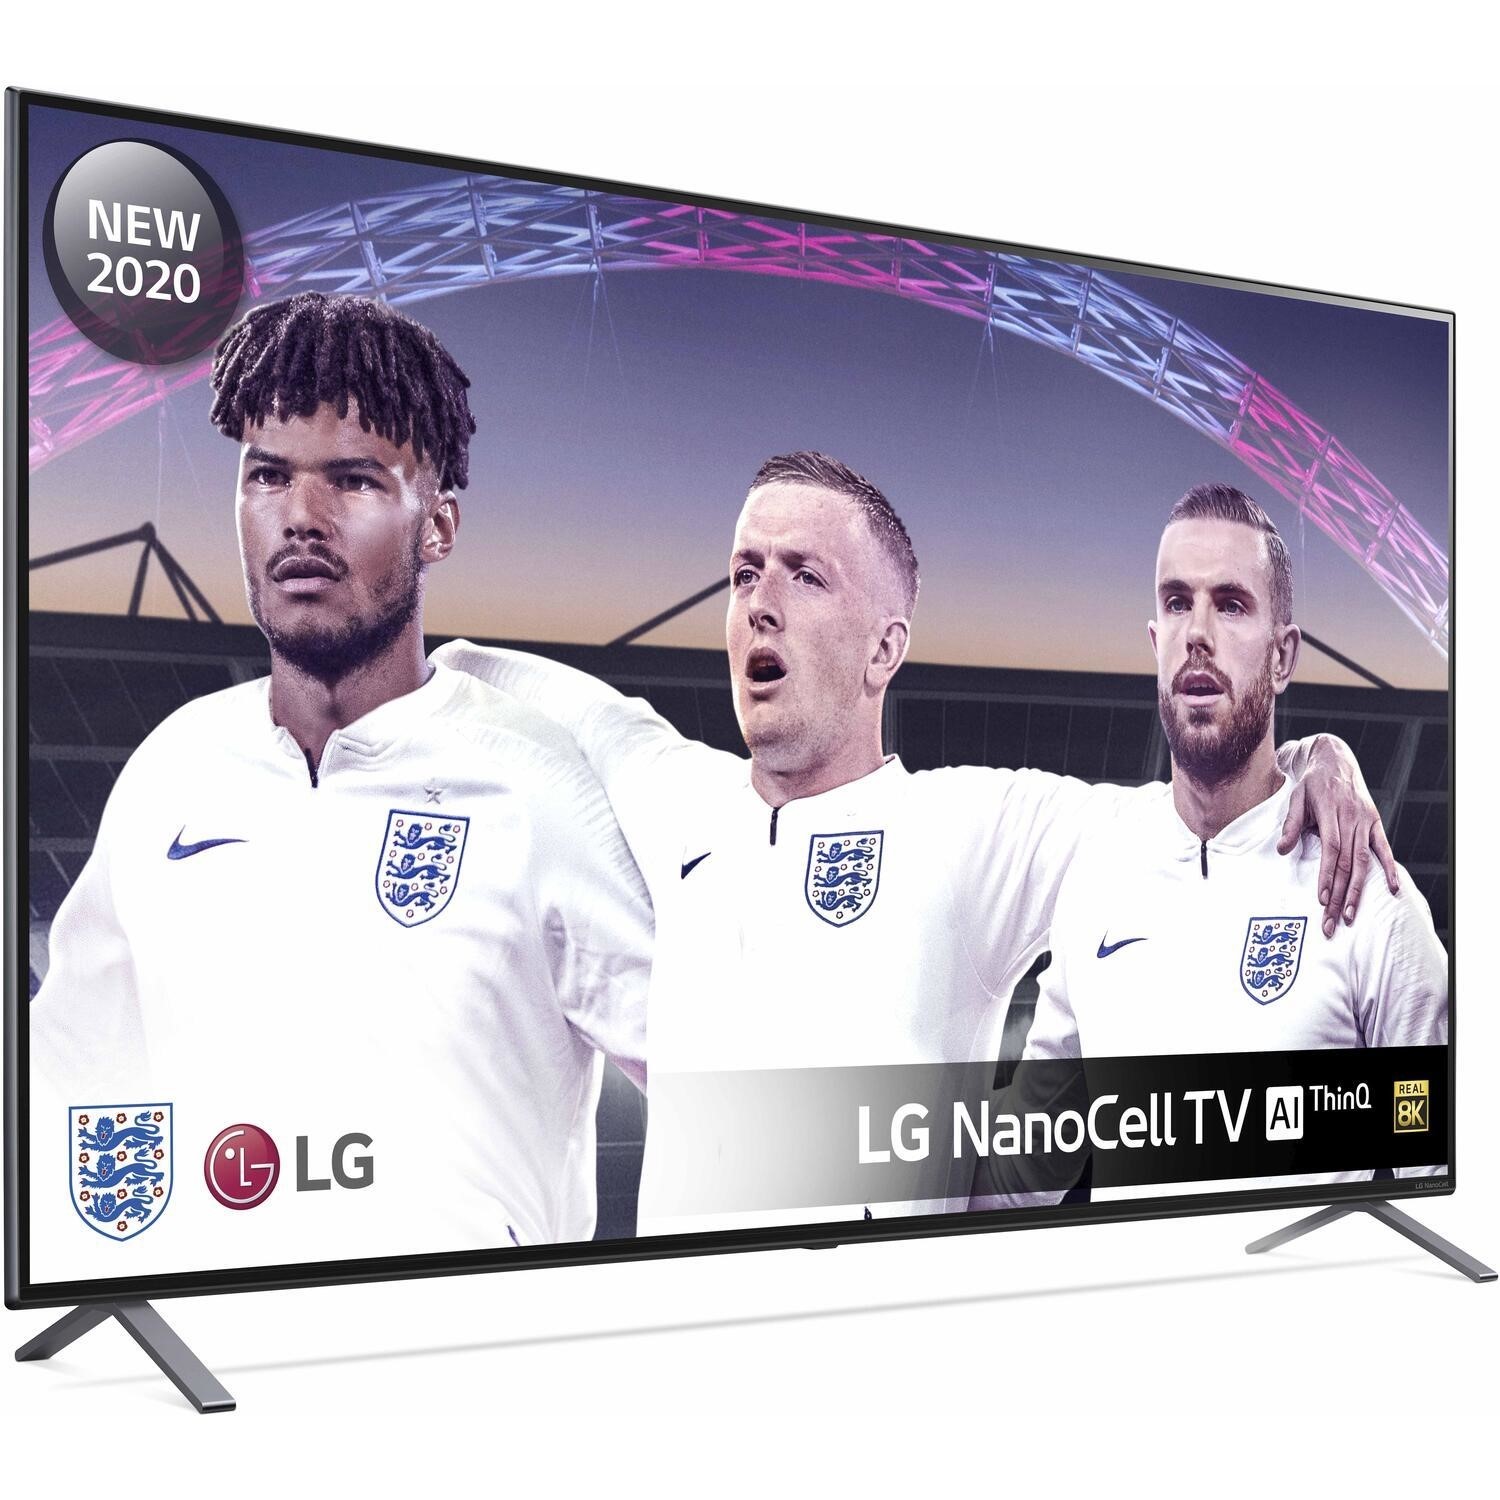 LG LG NanoCell 65'' NANO95 8K Smart TV con ThinQ AI (Inteligencia